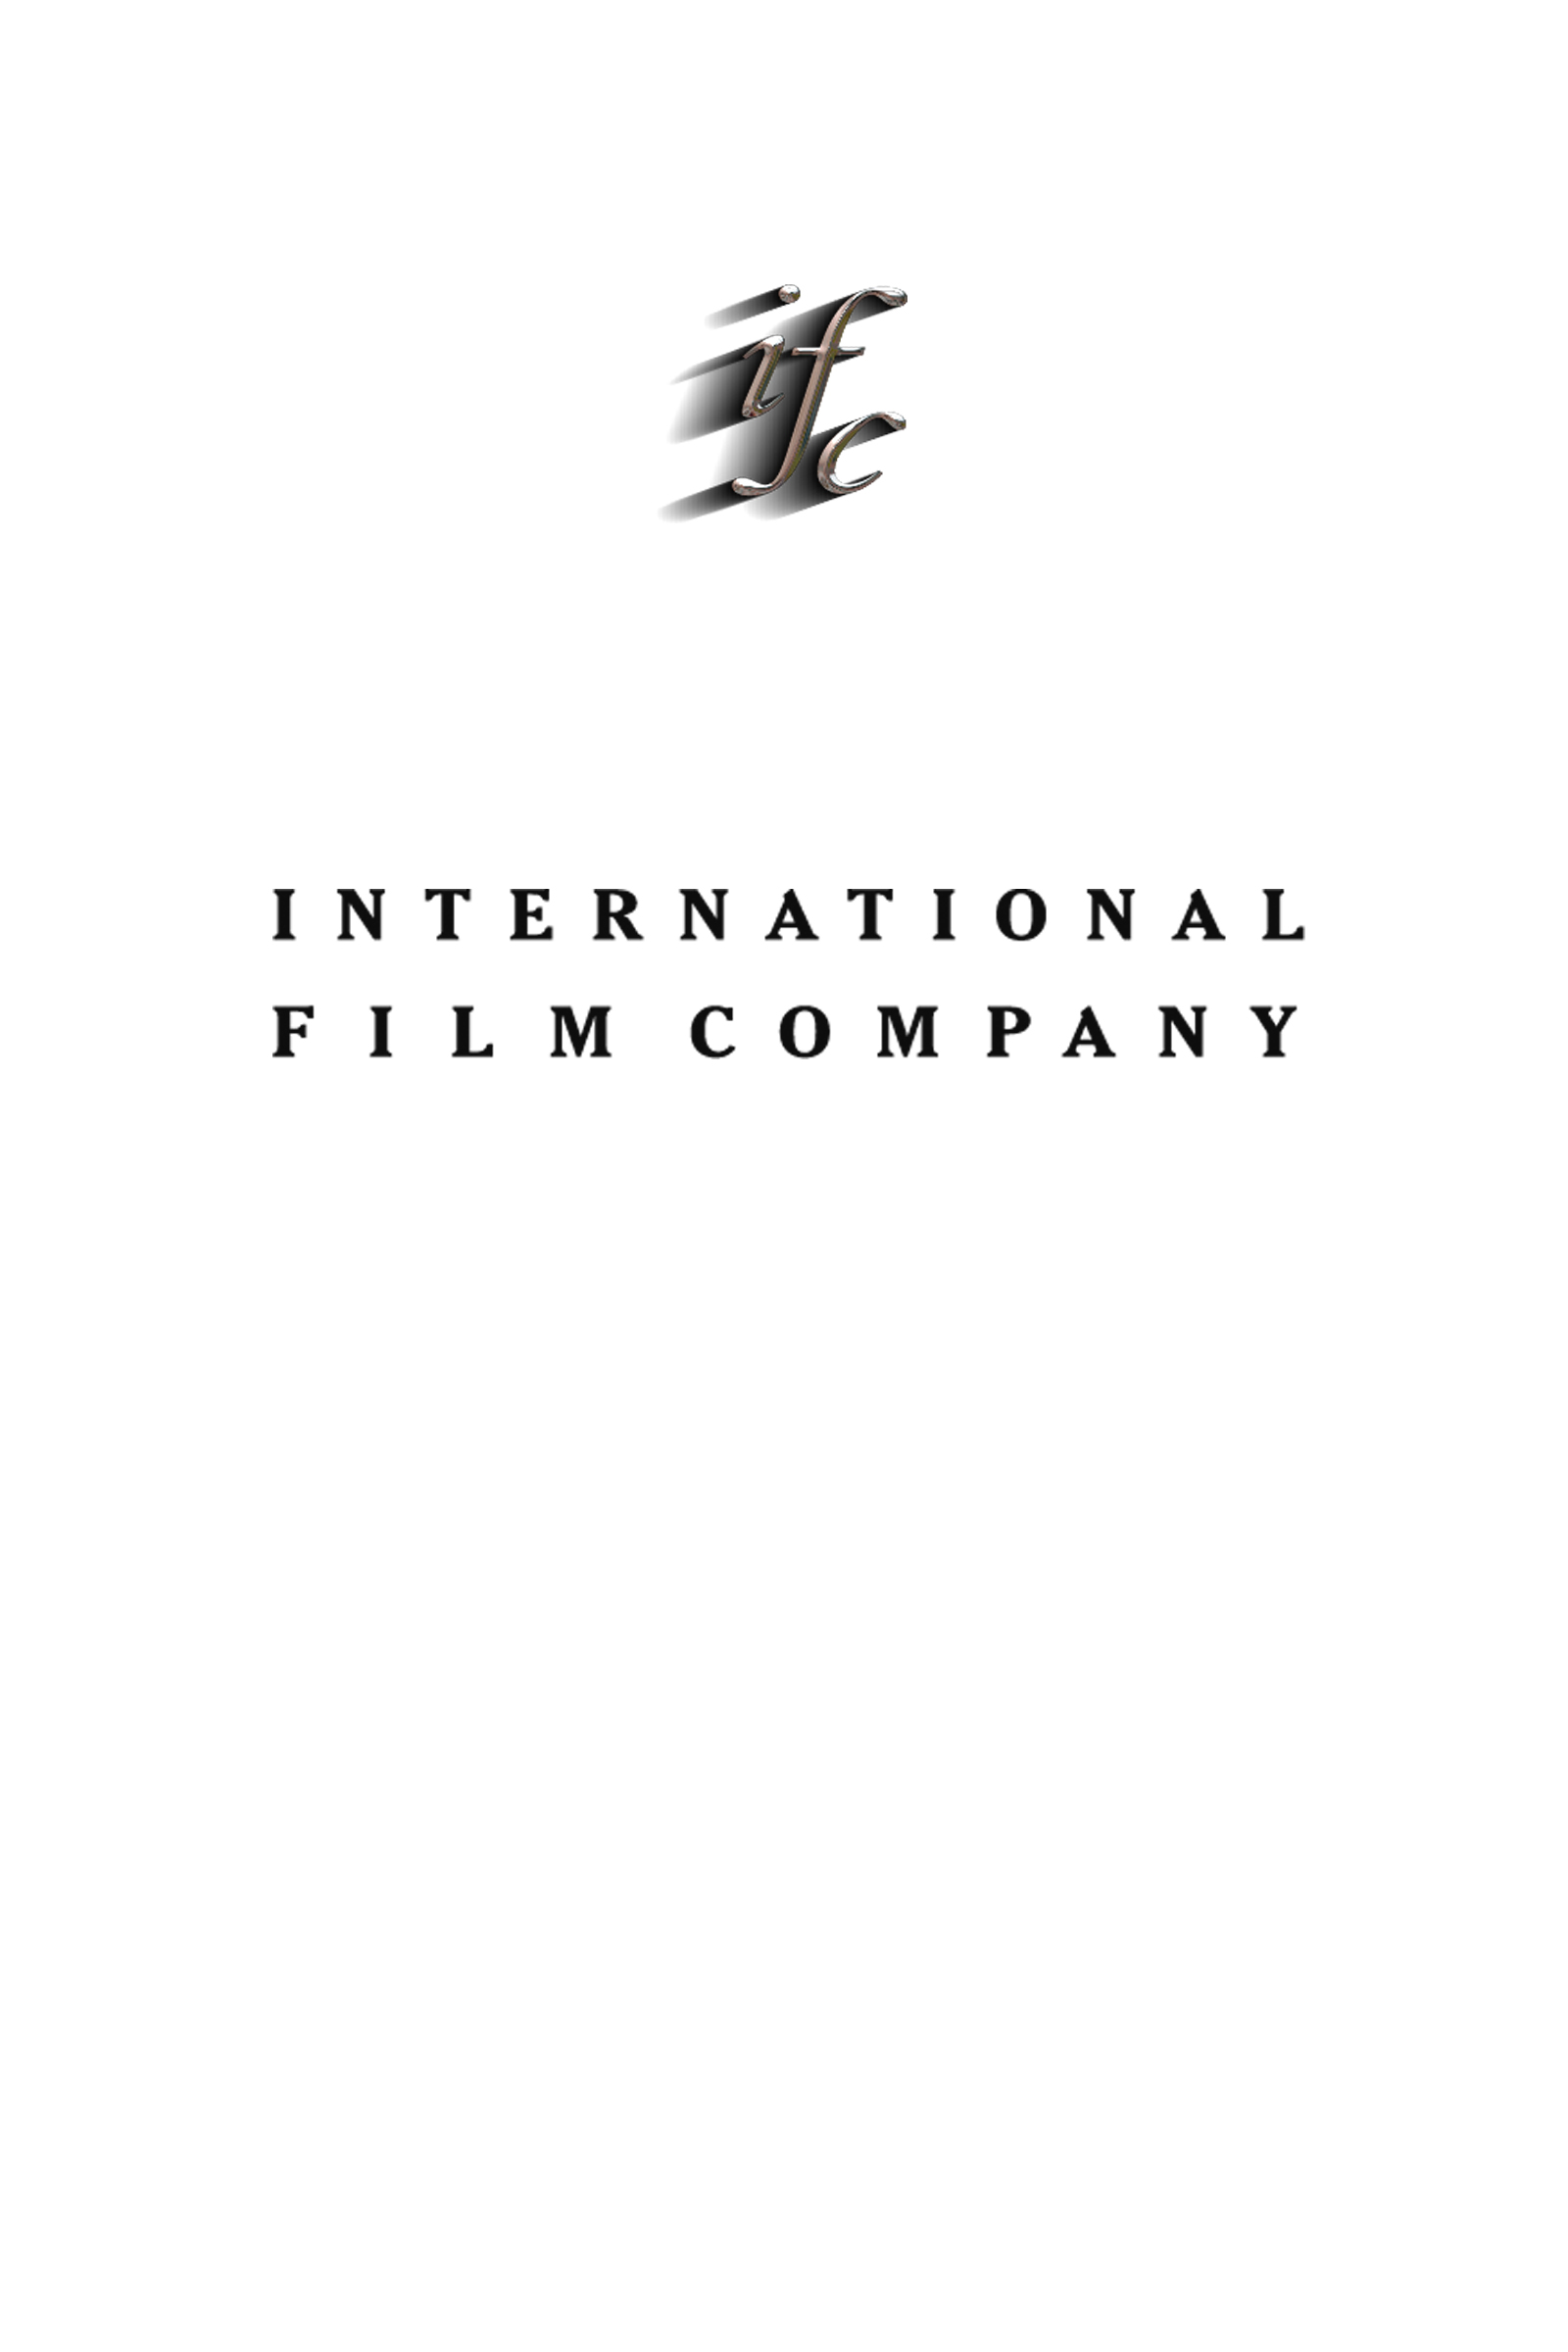 INTERNATIONAL FILM COMPANY